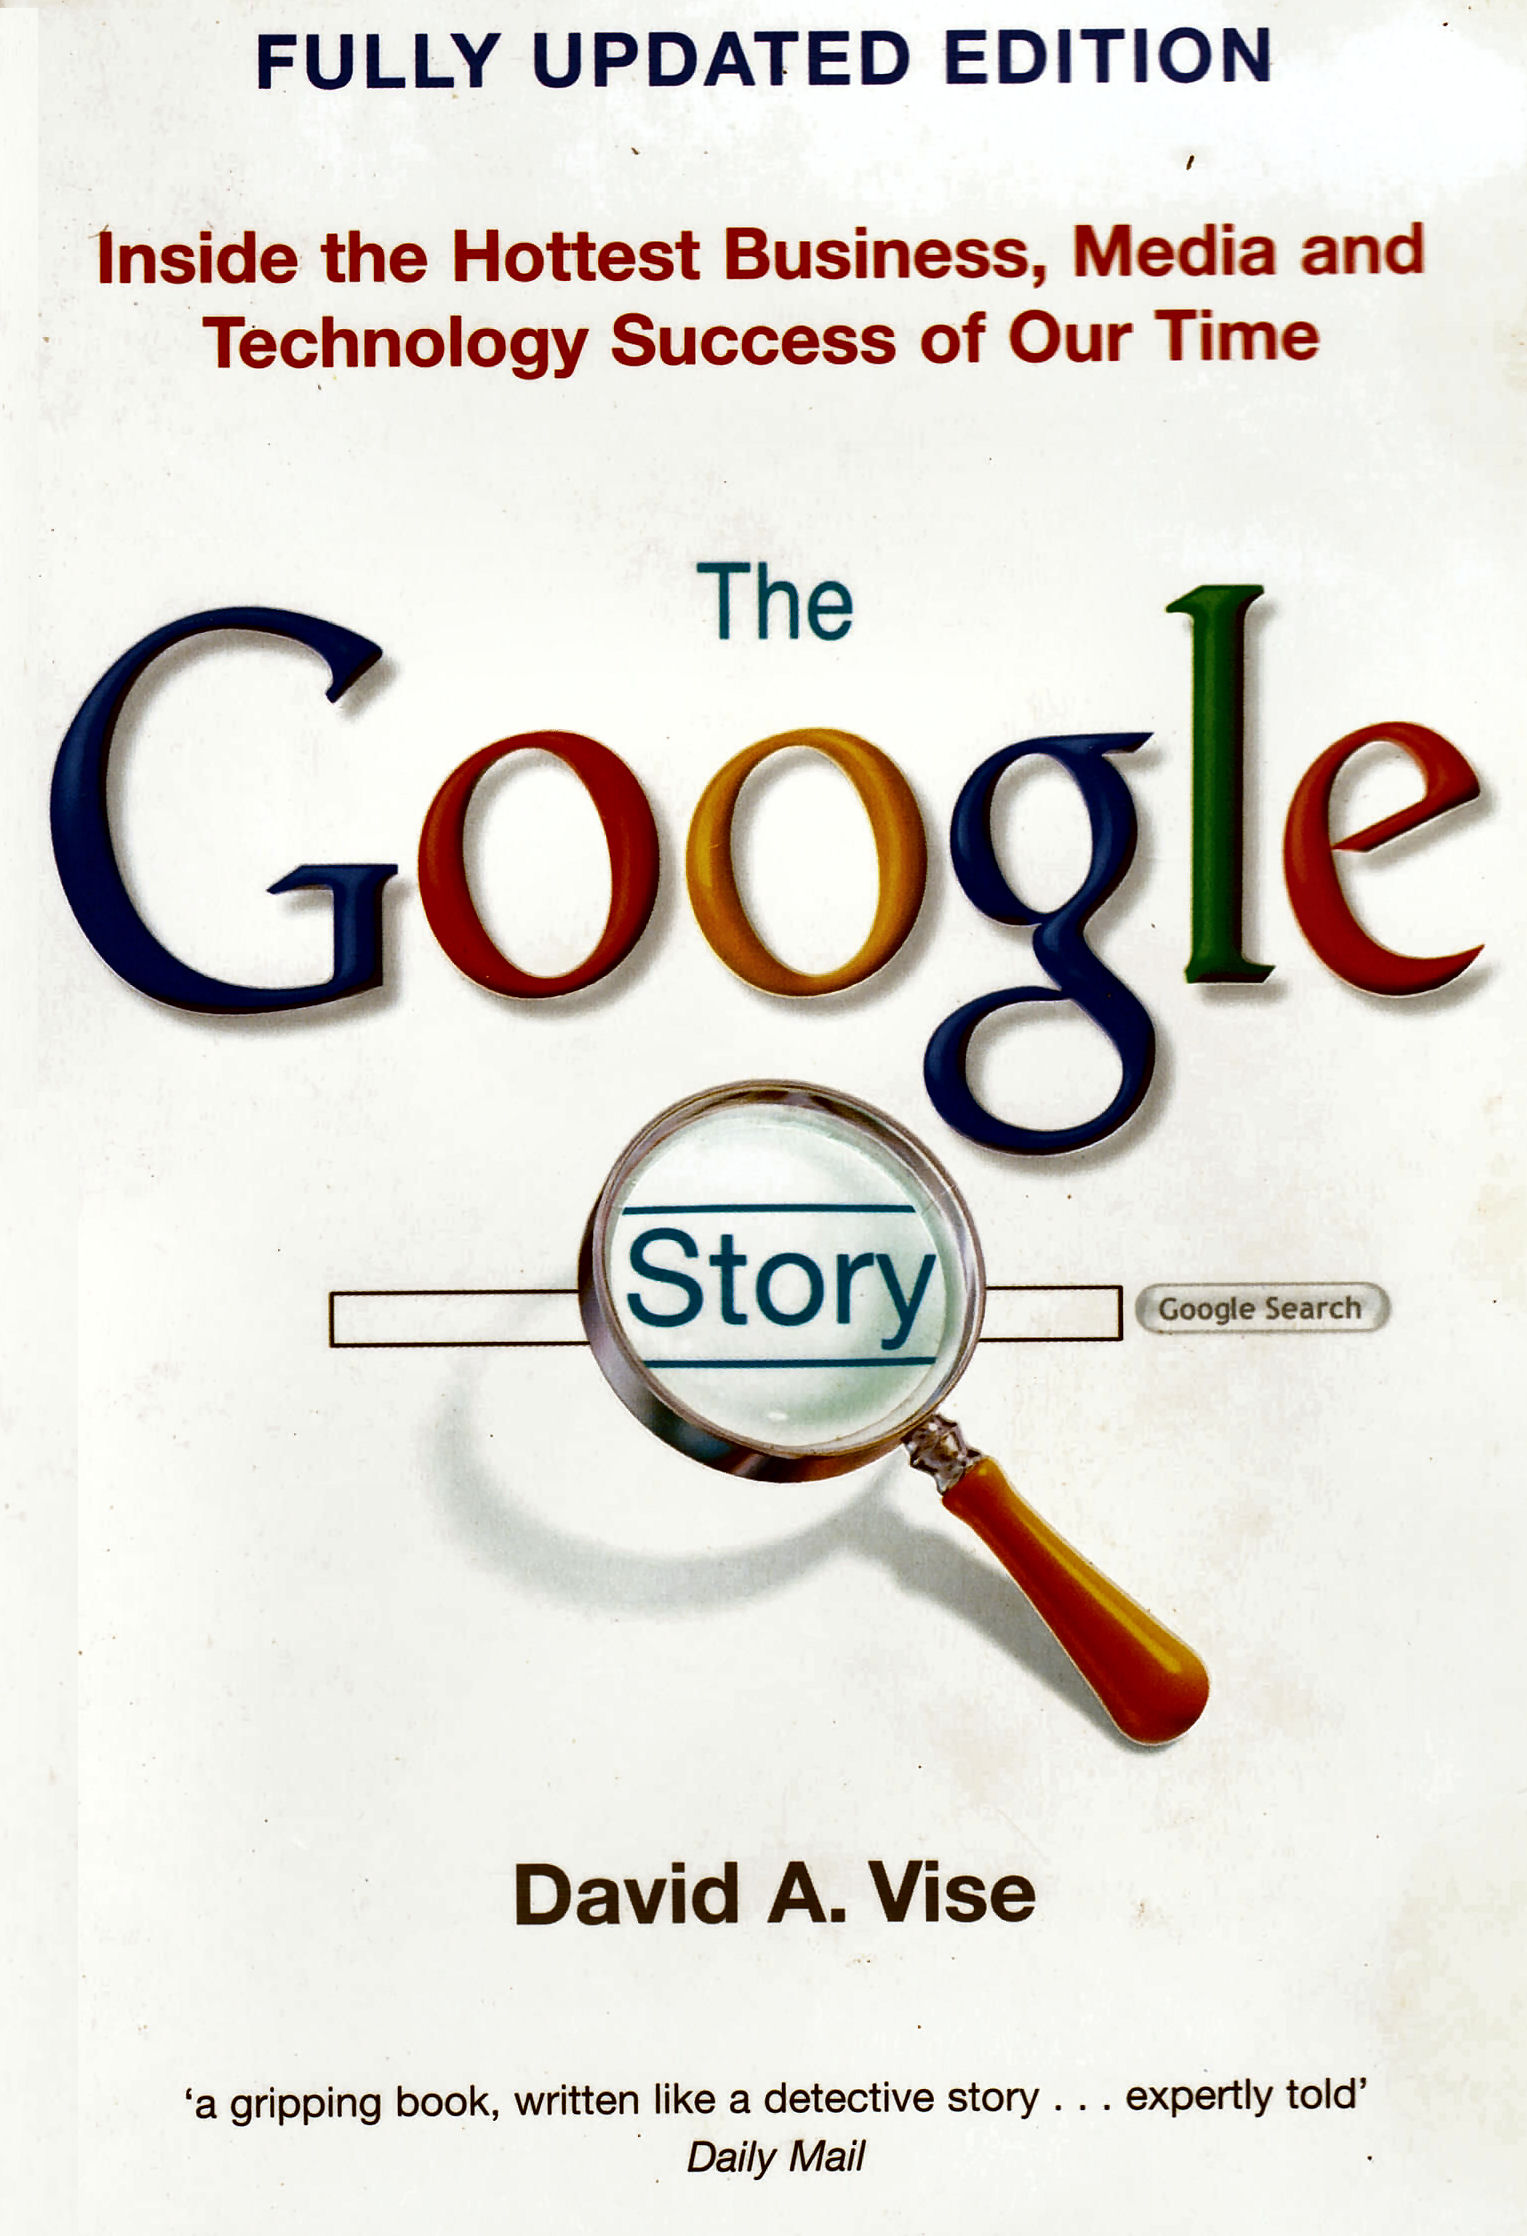 Book on Google